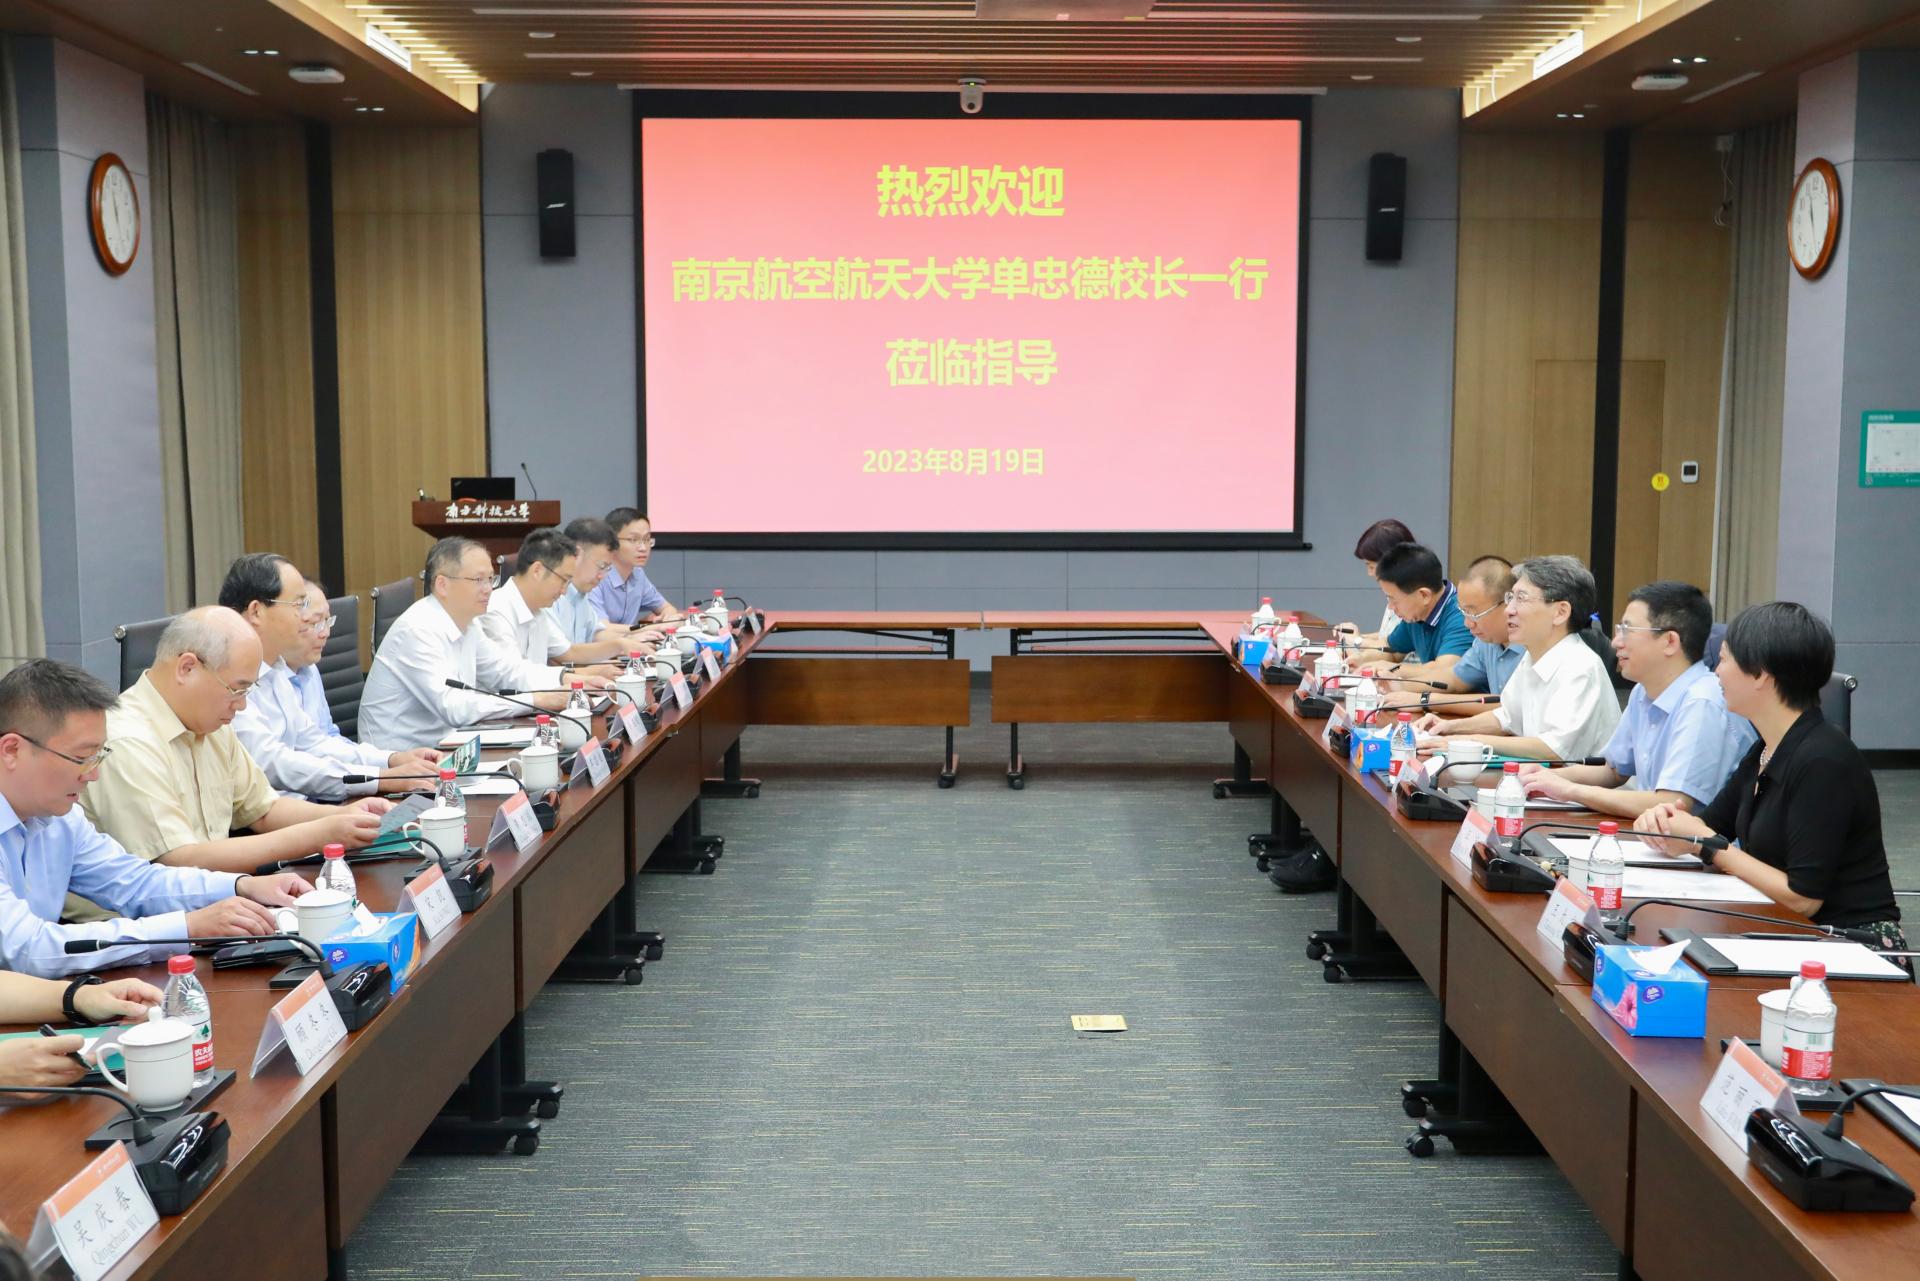 SUSTech welcomes President of Nanjing University of Aeronautics and Astronautics